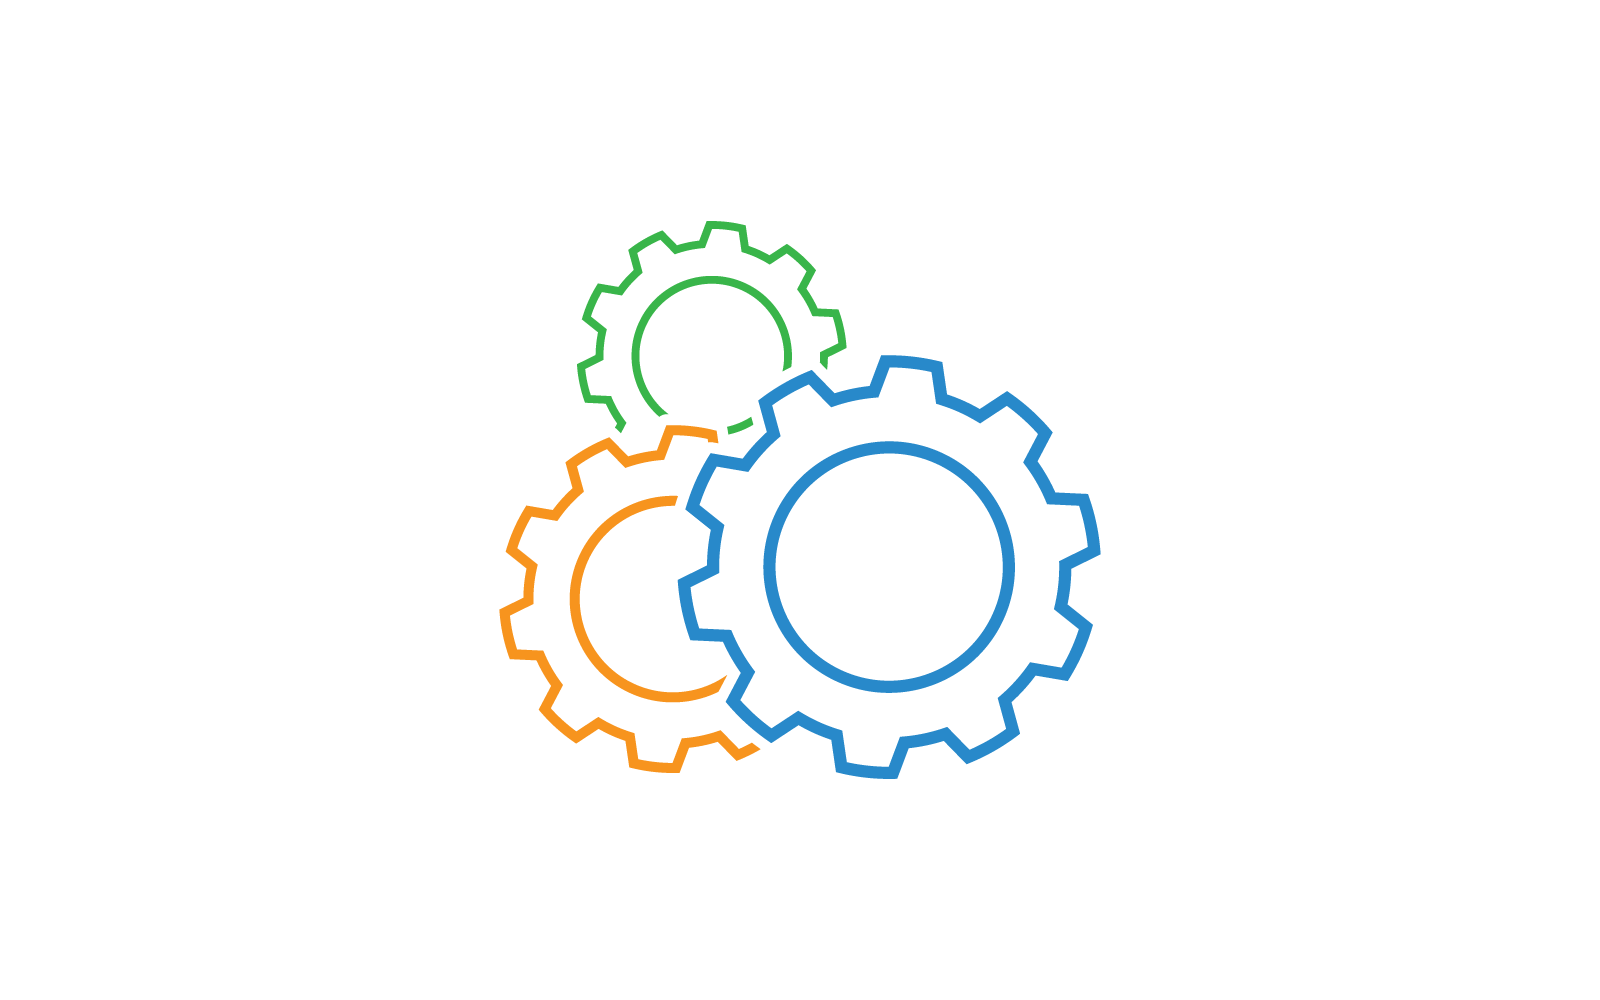 Gear technology logo icon vector illustration